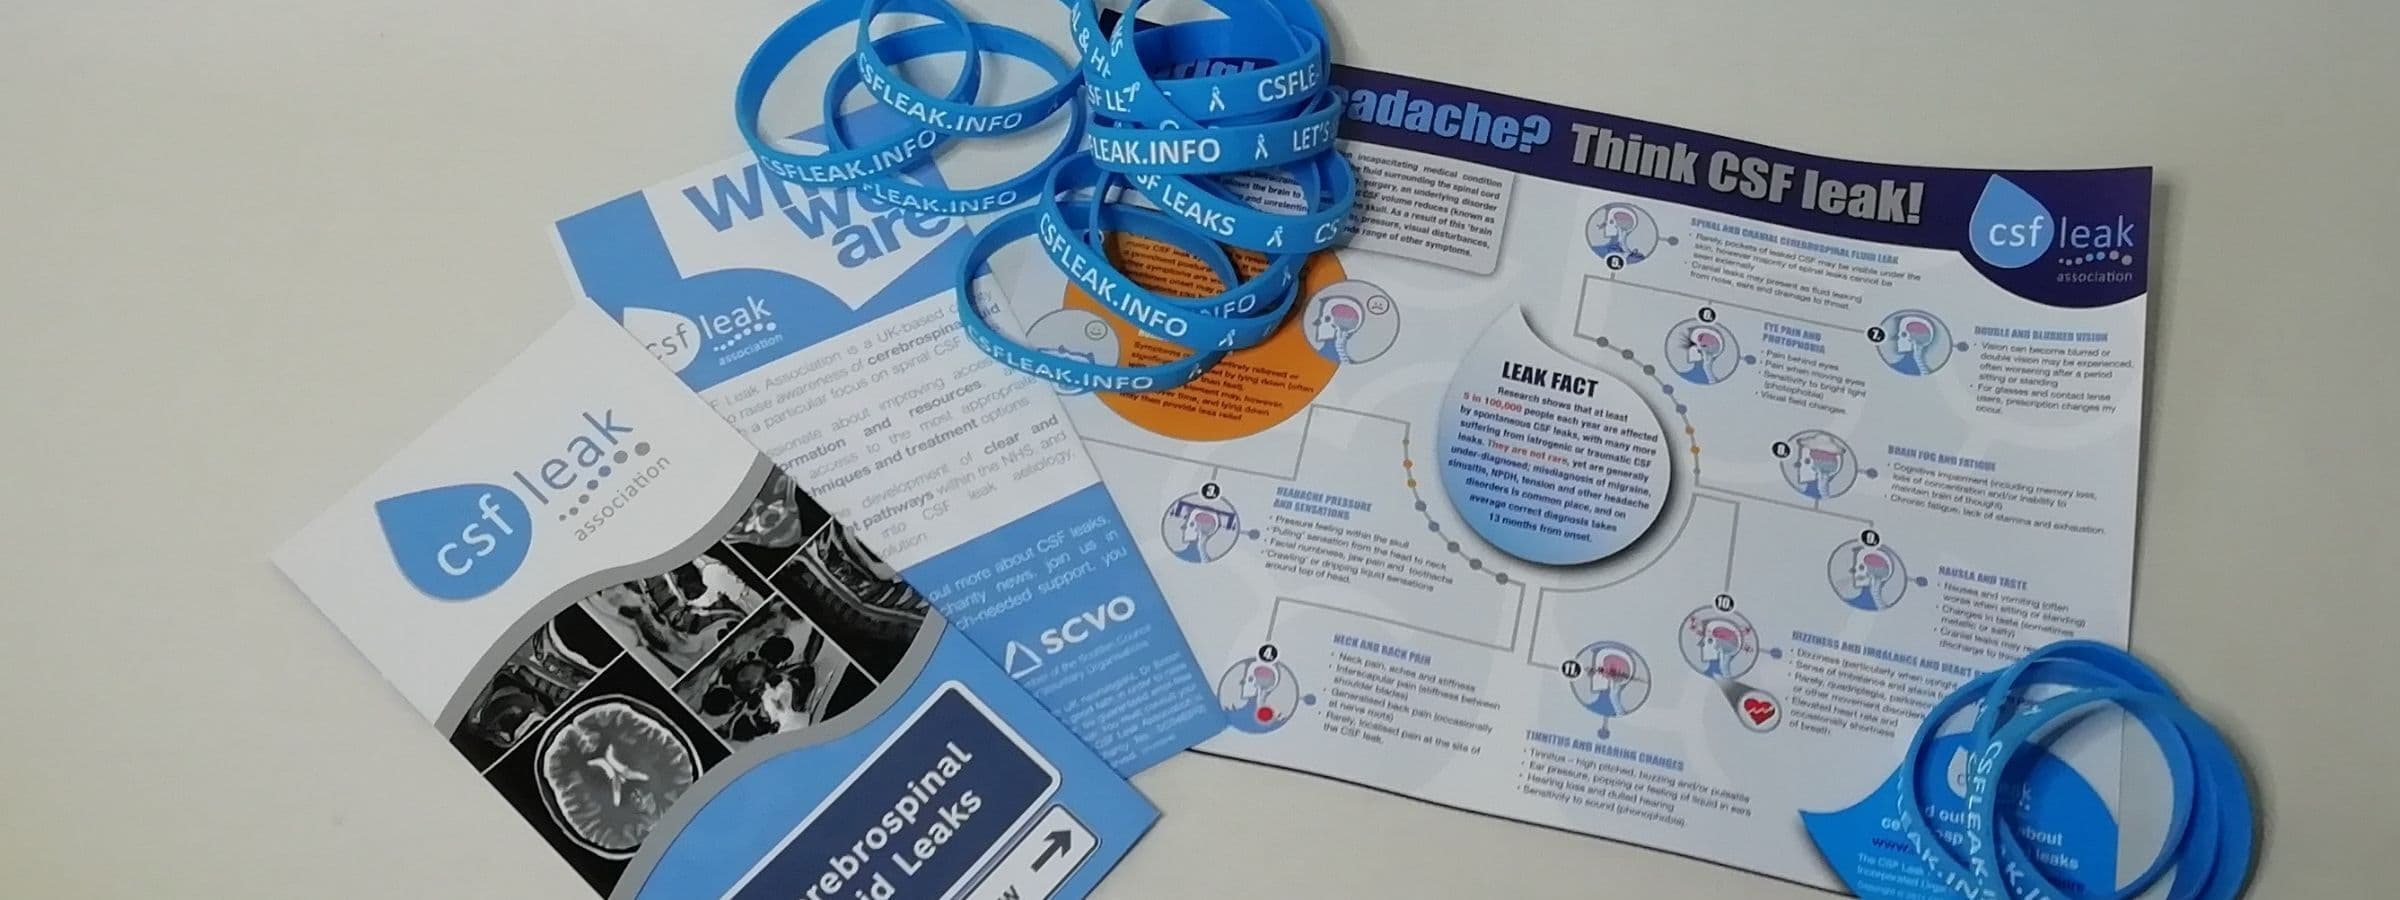 A pile of pamphlets and CSF Leak Association awareness bracelets.